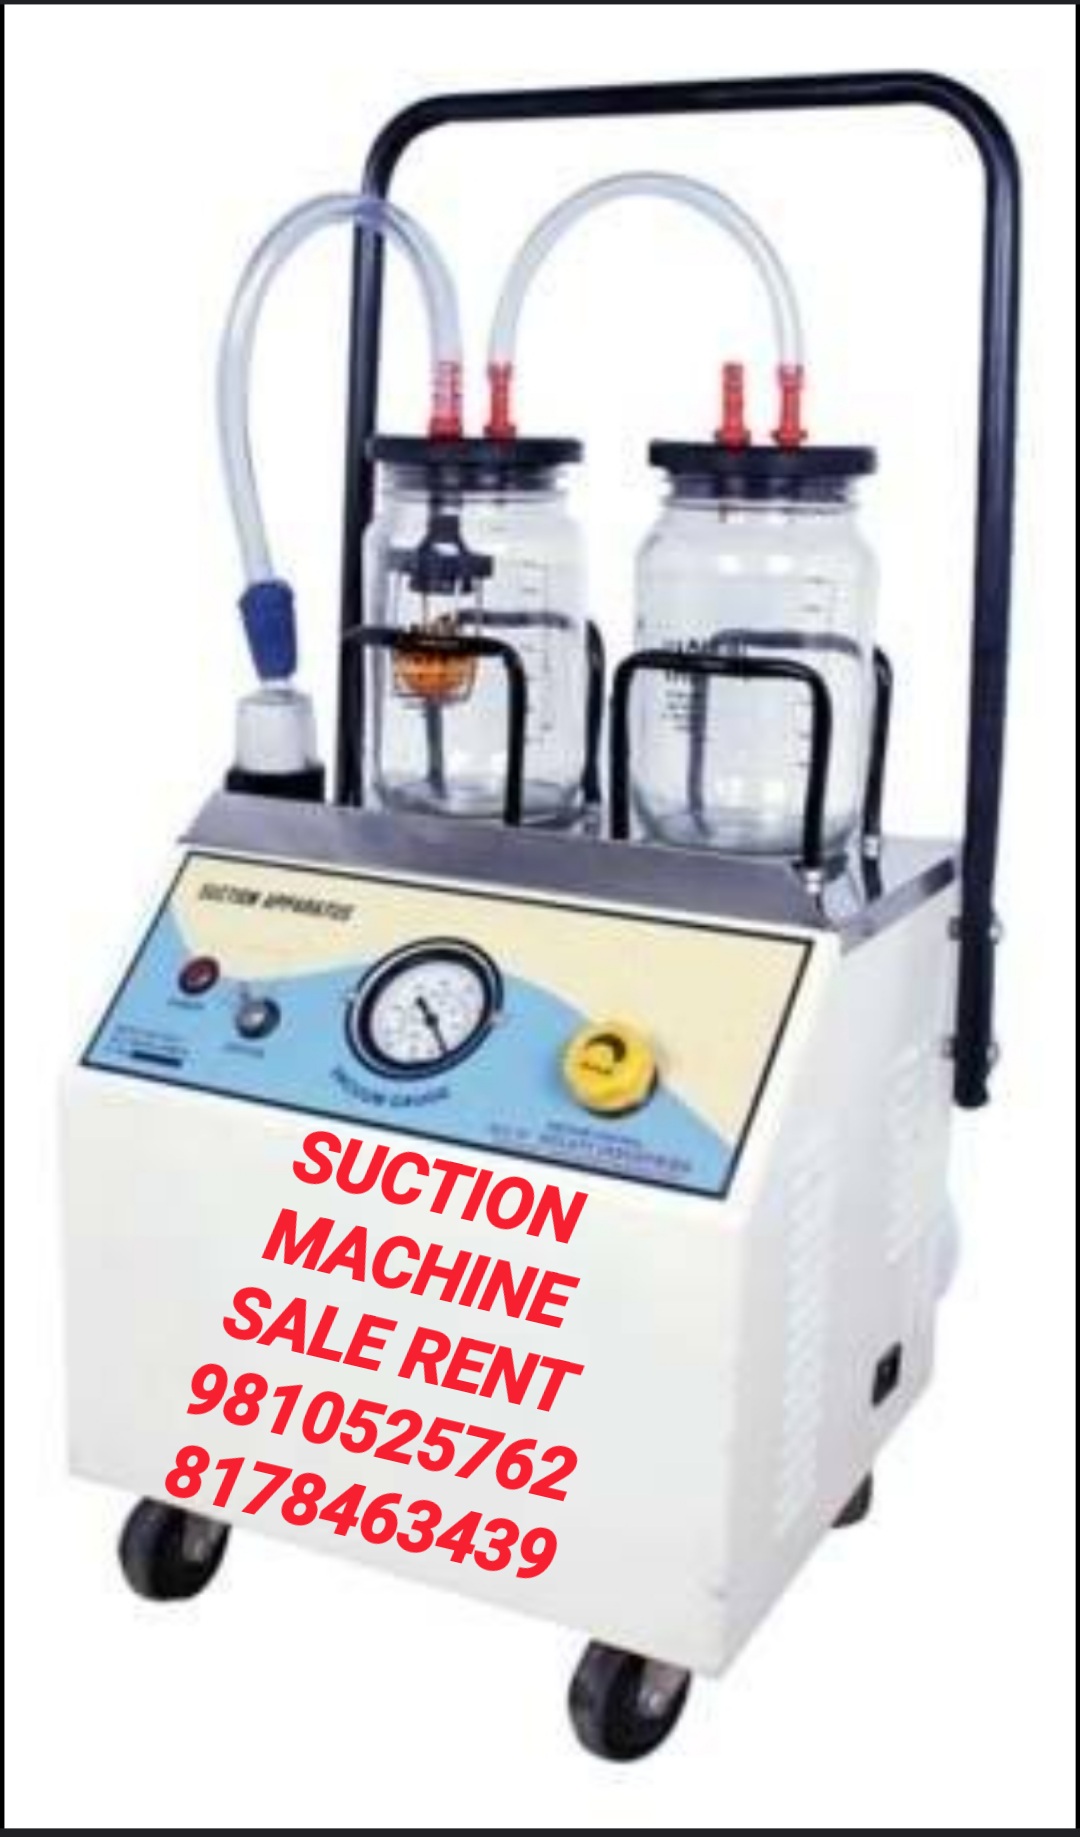 Suction Machine For Rent In Shahdara Delhi 8178463439